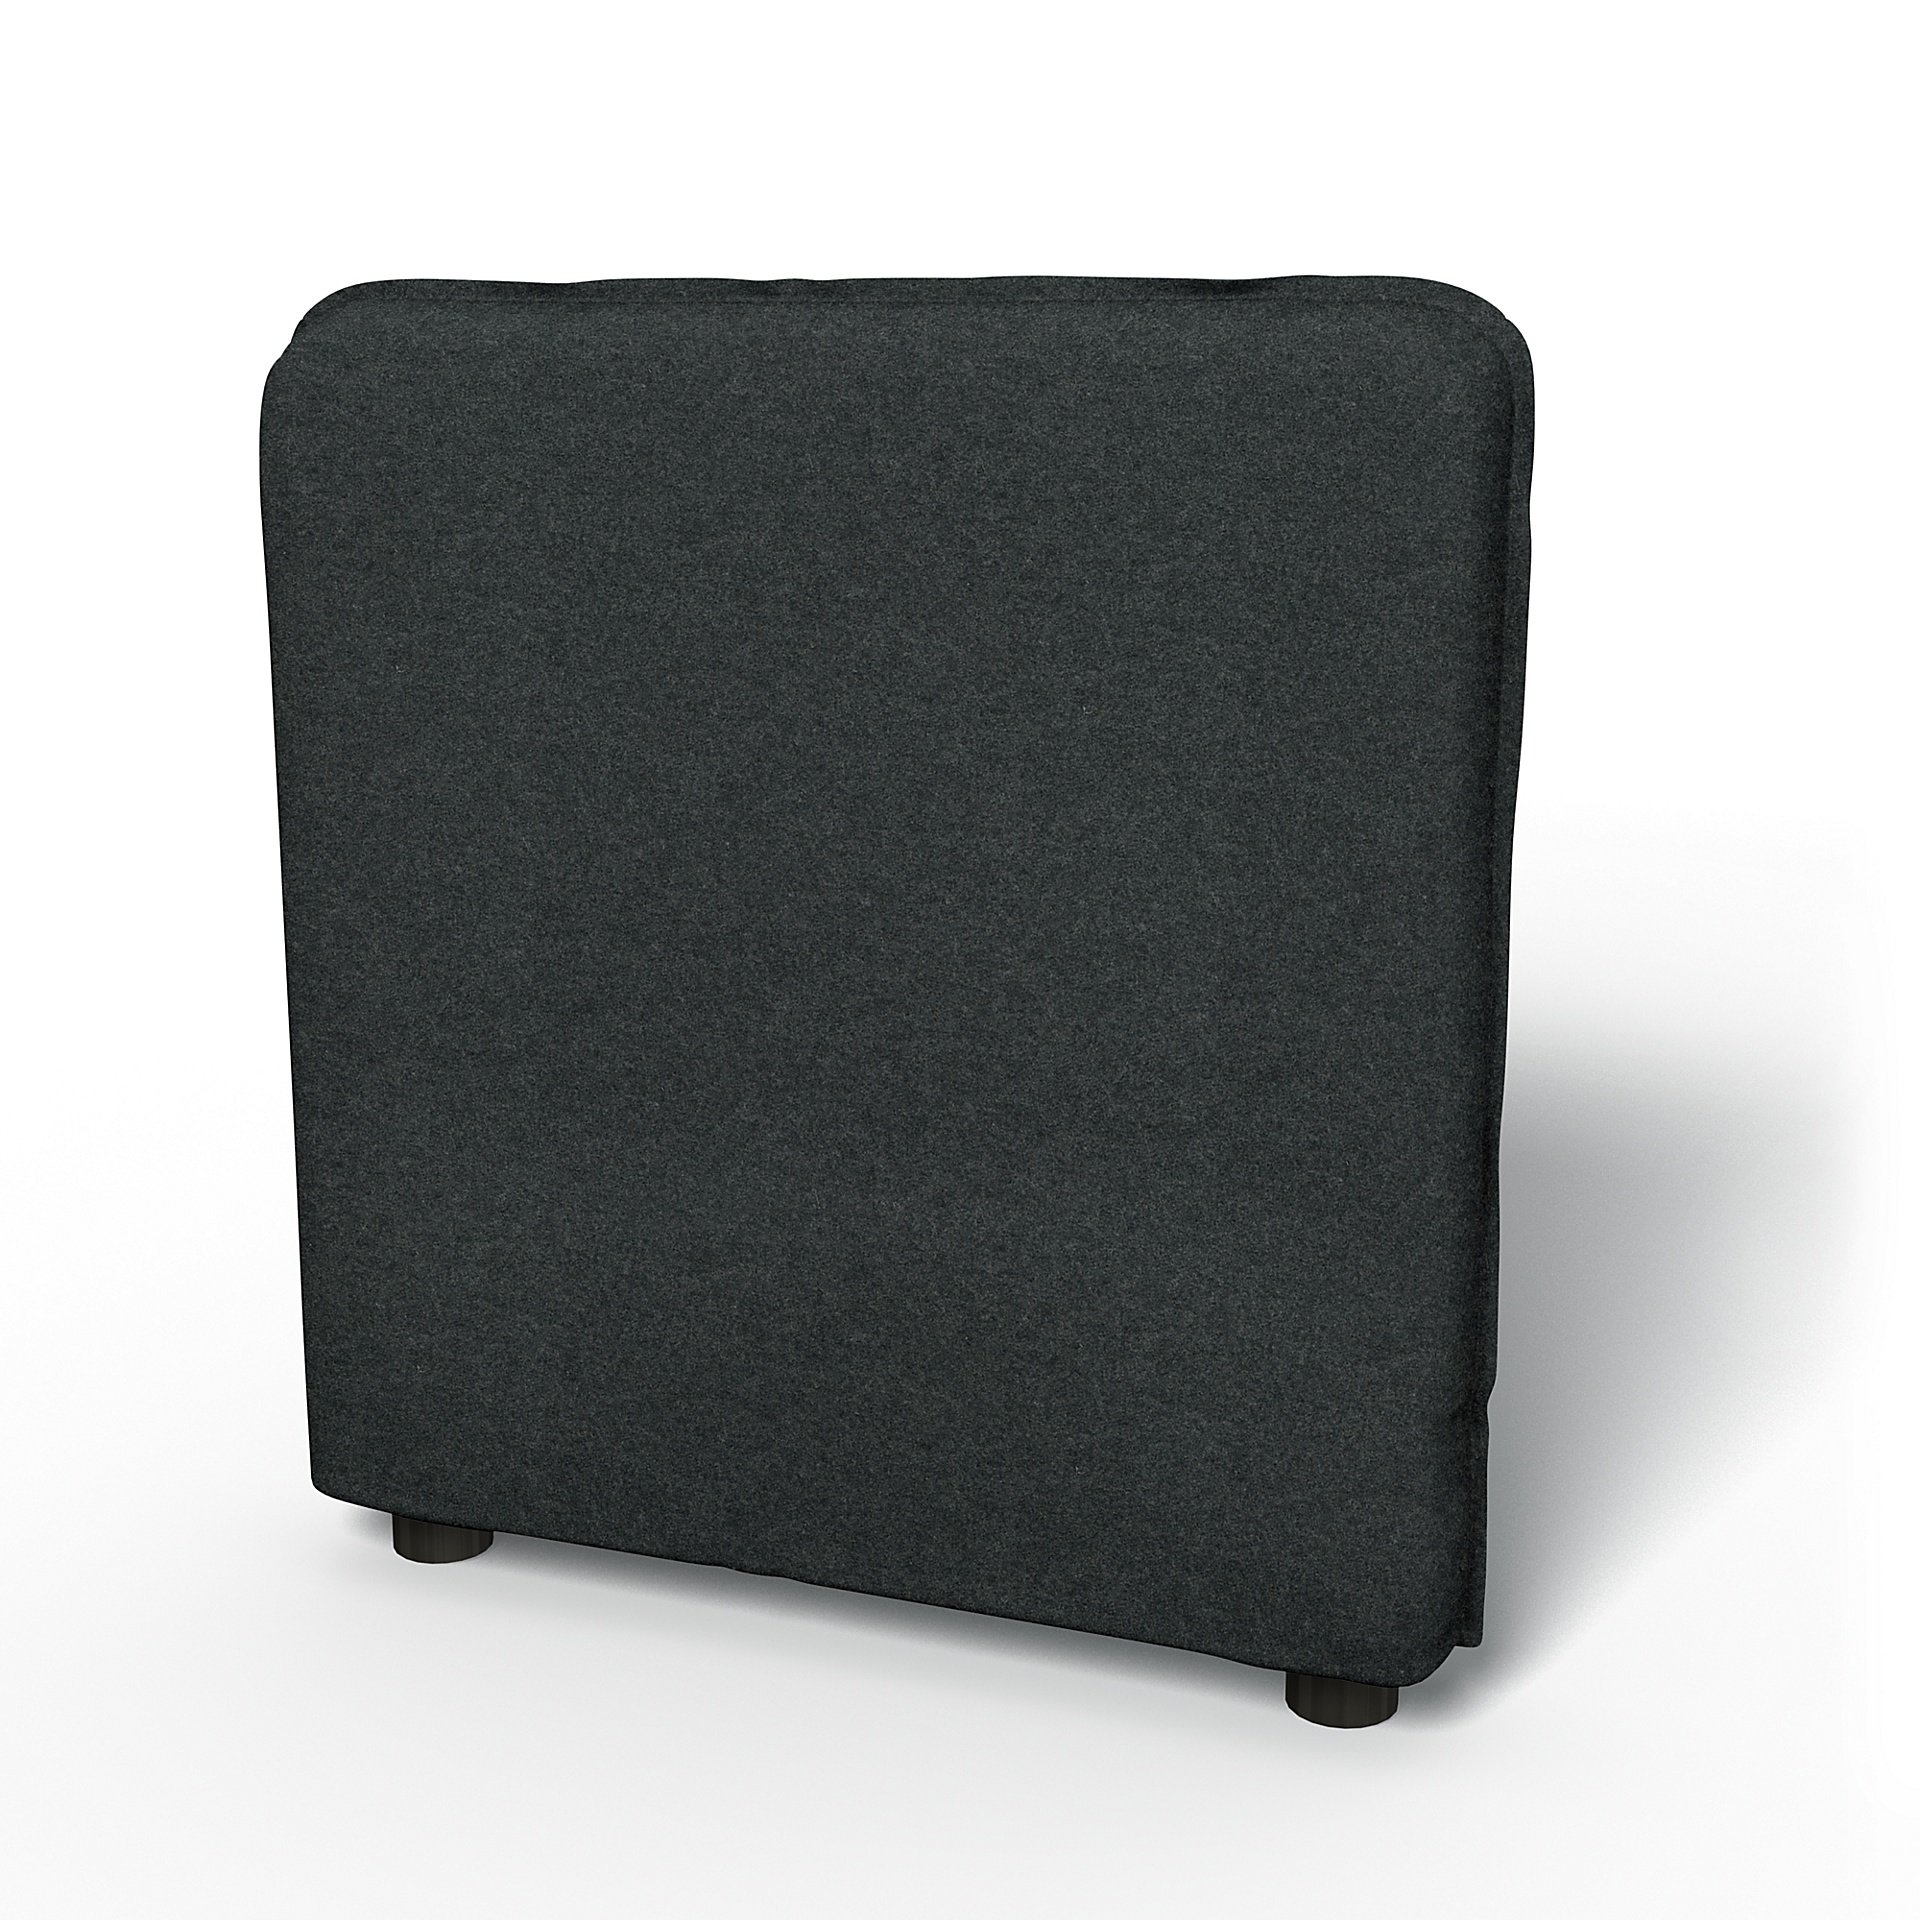 IKEA - Vallentuna Armrest Cover (80x60x13cm), Stone, Wool - Bemz